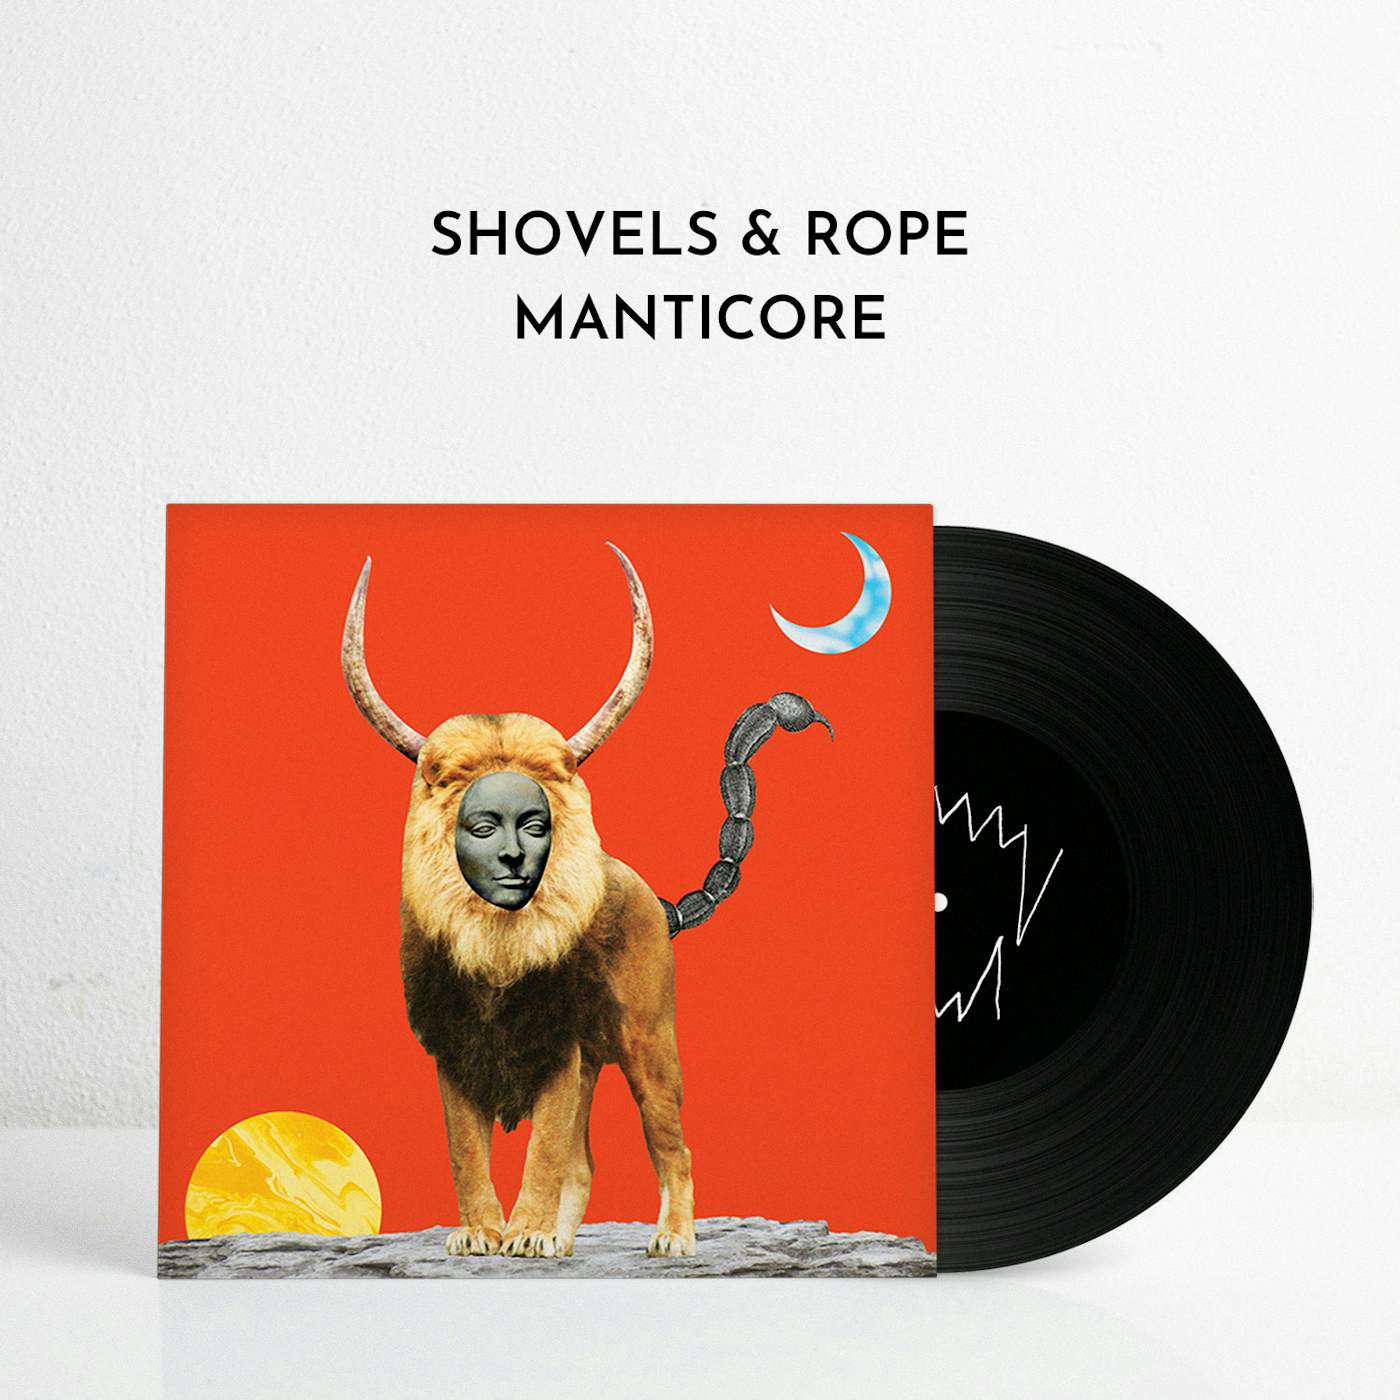 Shovels & Rope Manticore (Vinyl)